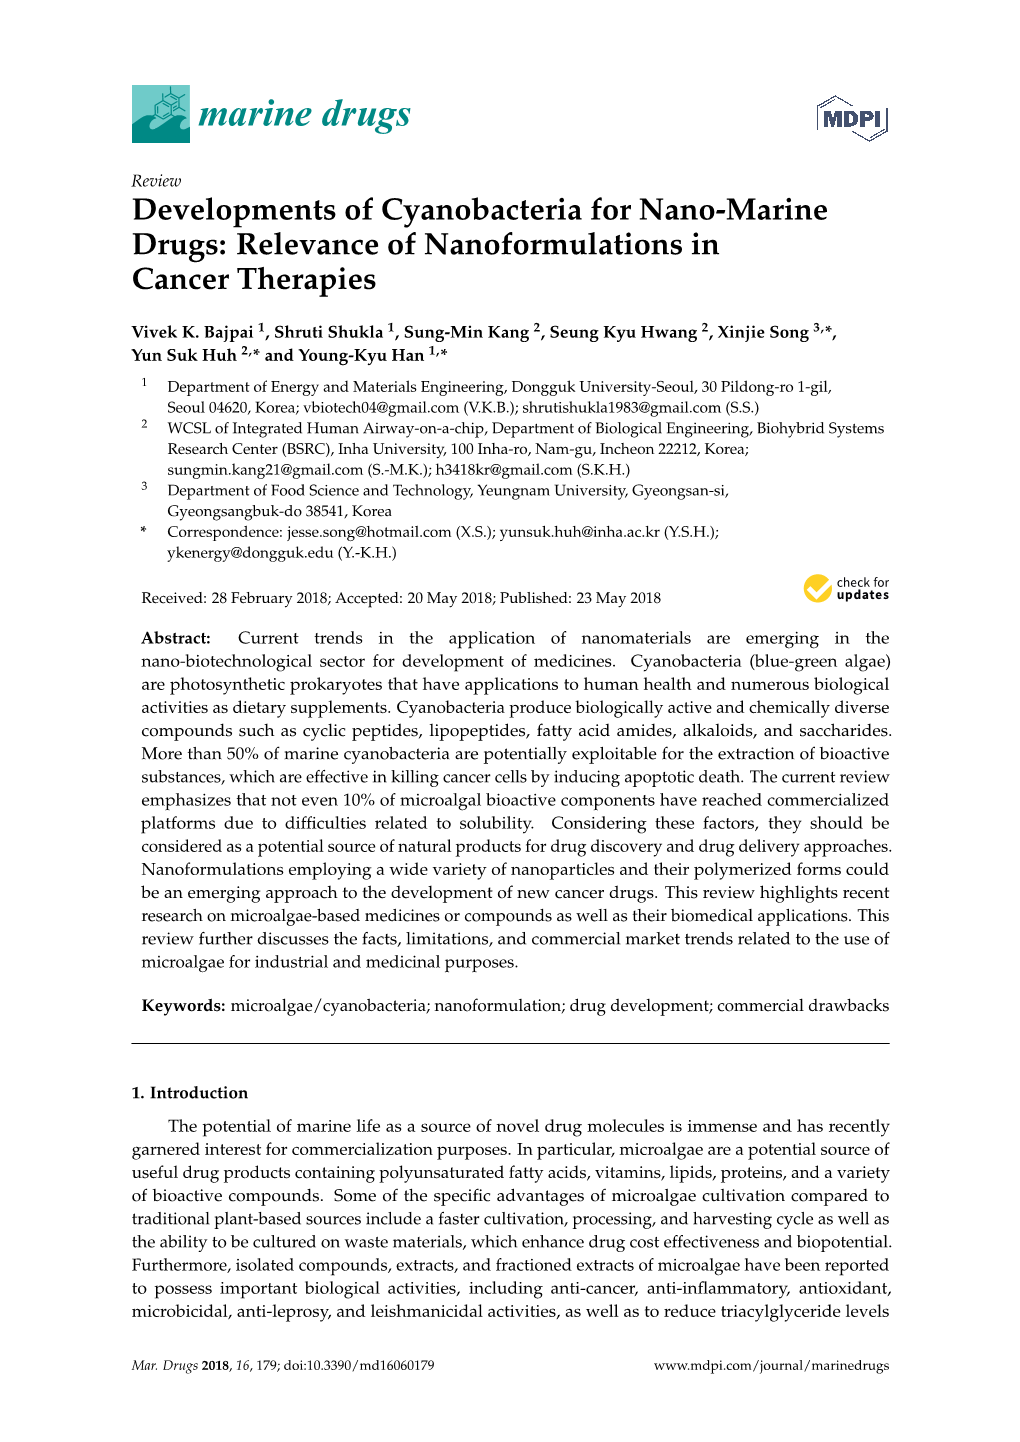 Developments of Cyanobacteria for Nano-Marine Drugs: Relevance of Nanoformulations in Cancer Therapies